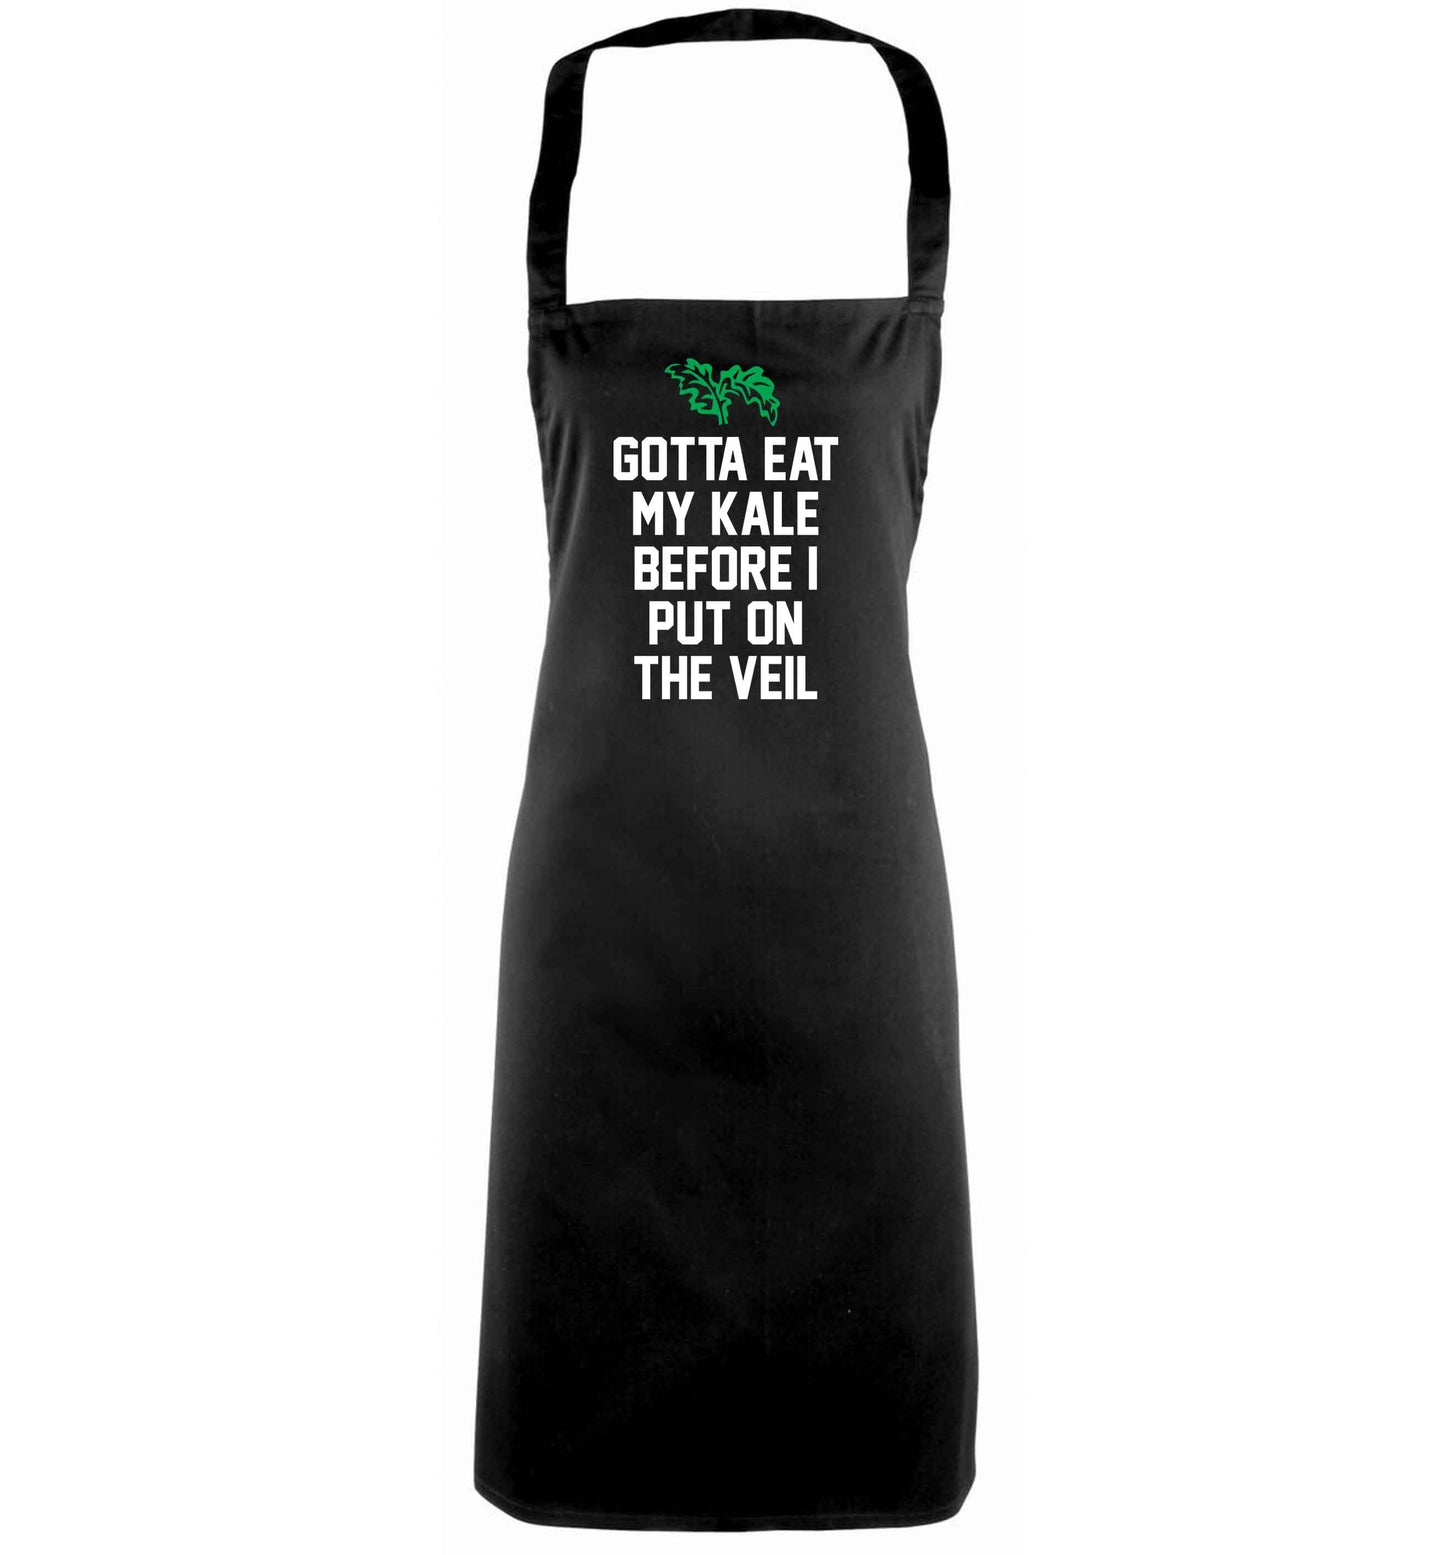 Gotta eat my kale before I put on the veil black apron